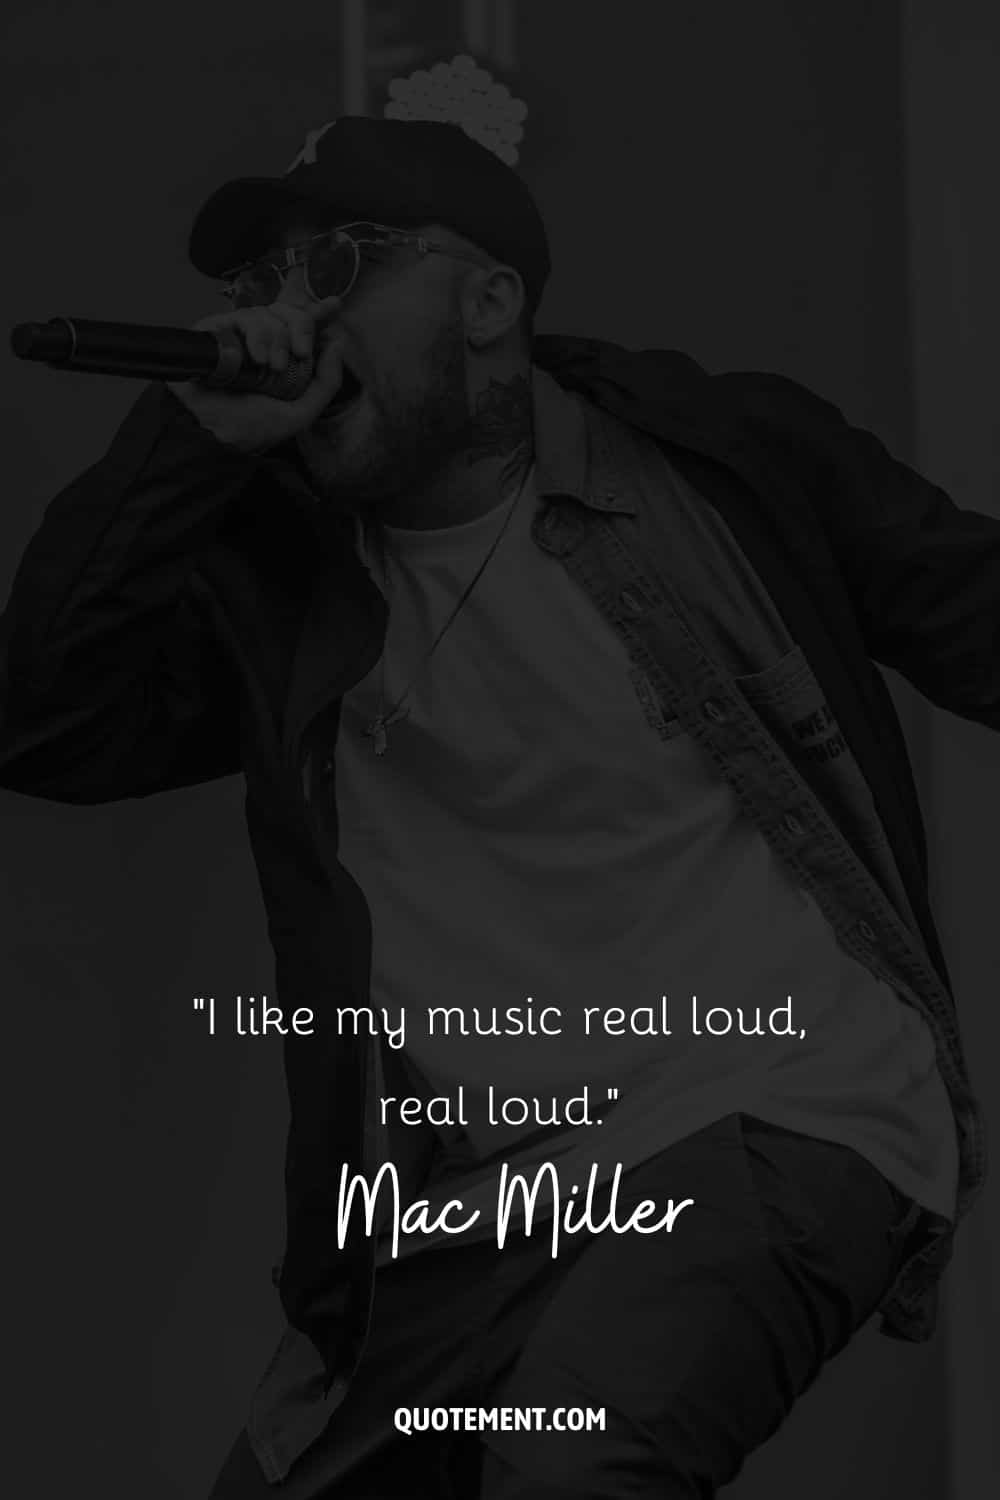 “I like my music real loud, real loud.” – Mac Miller